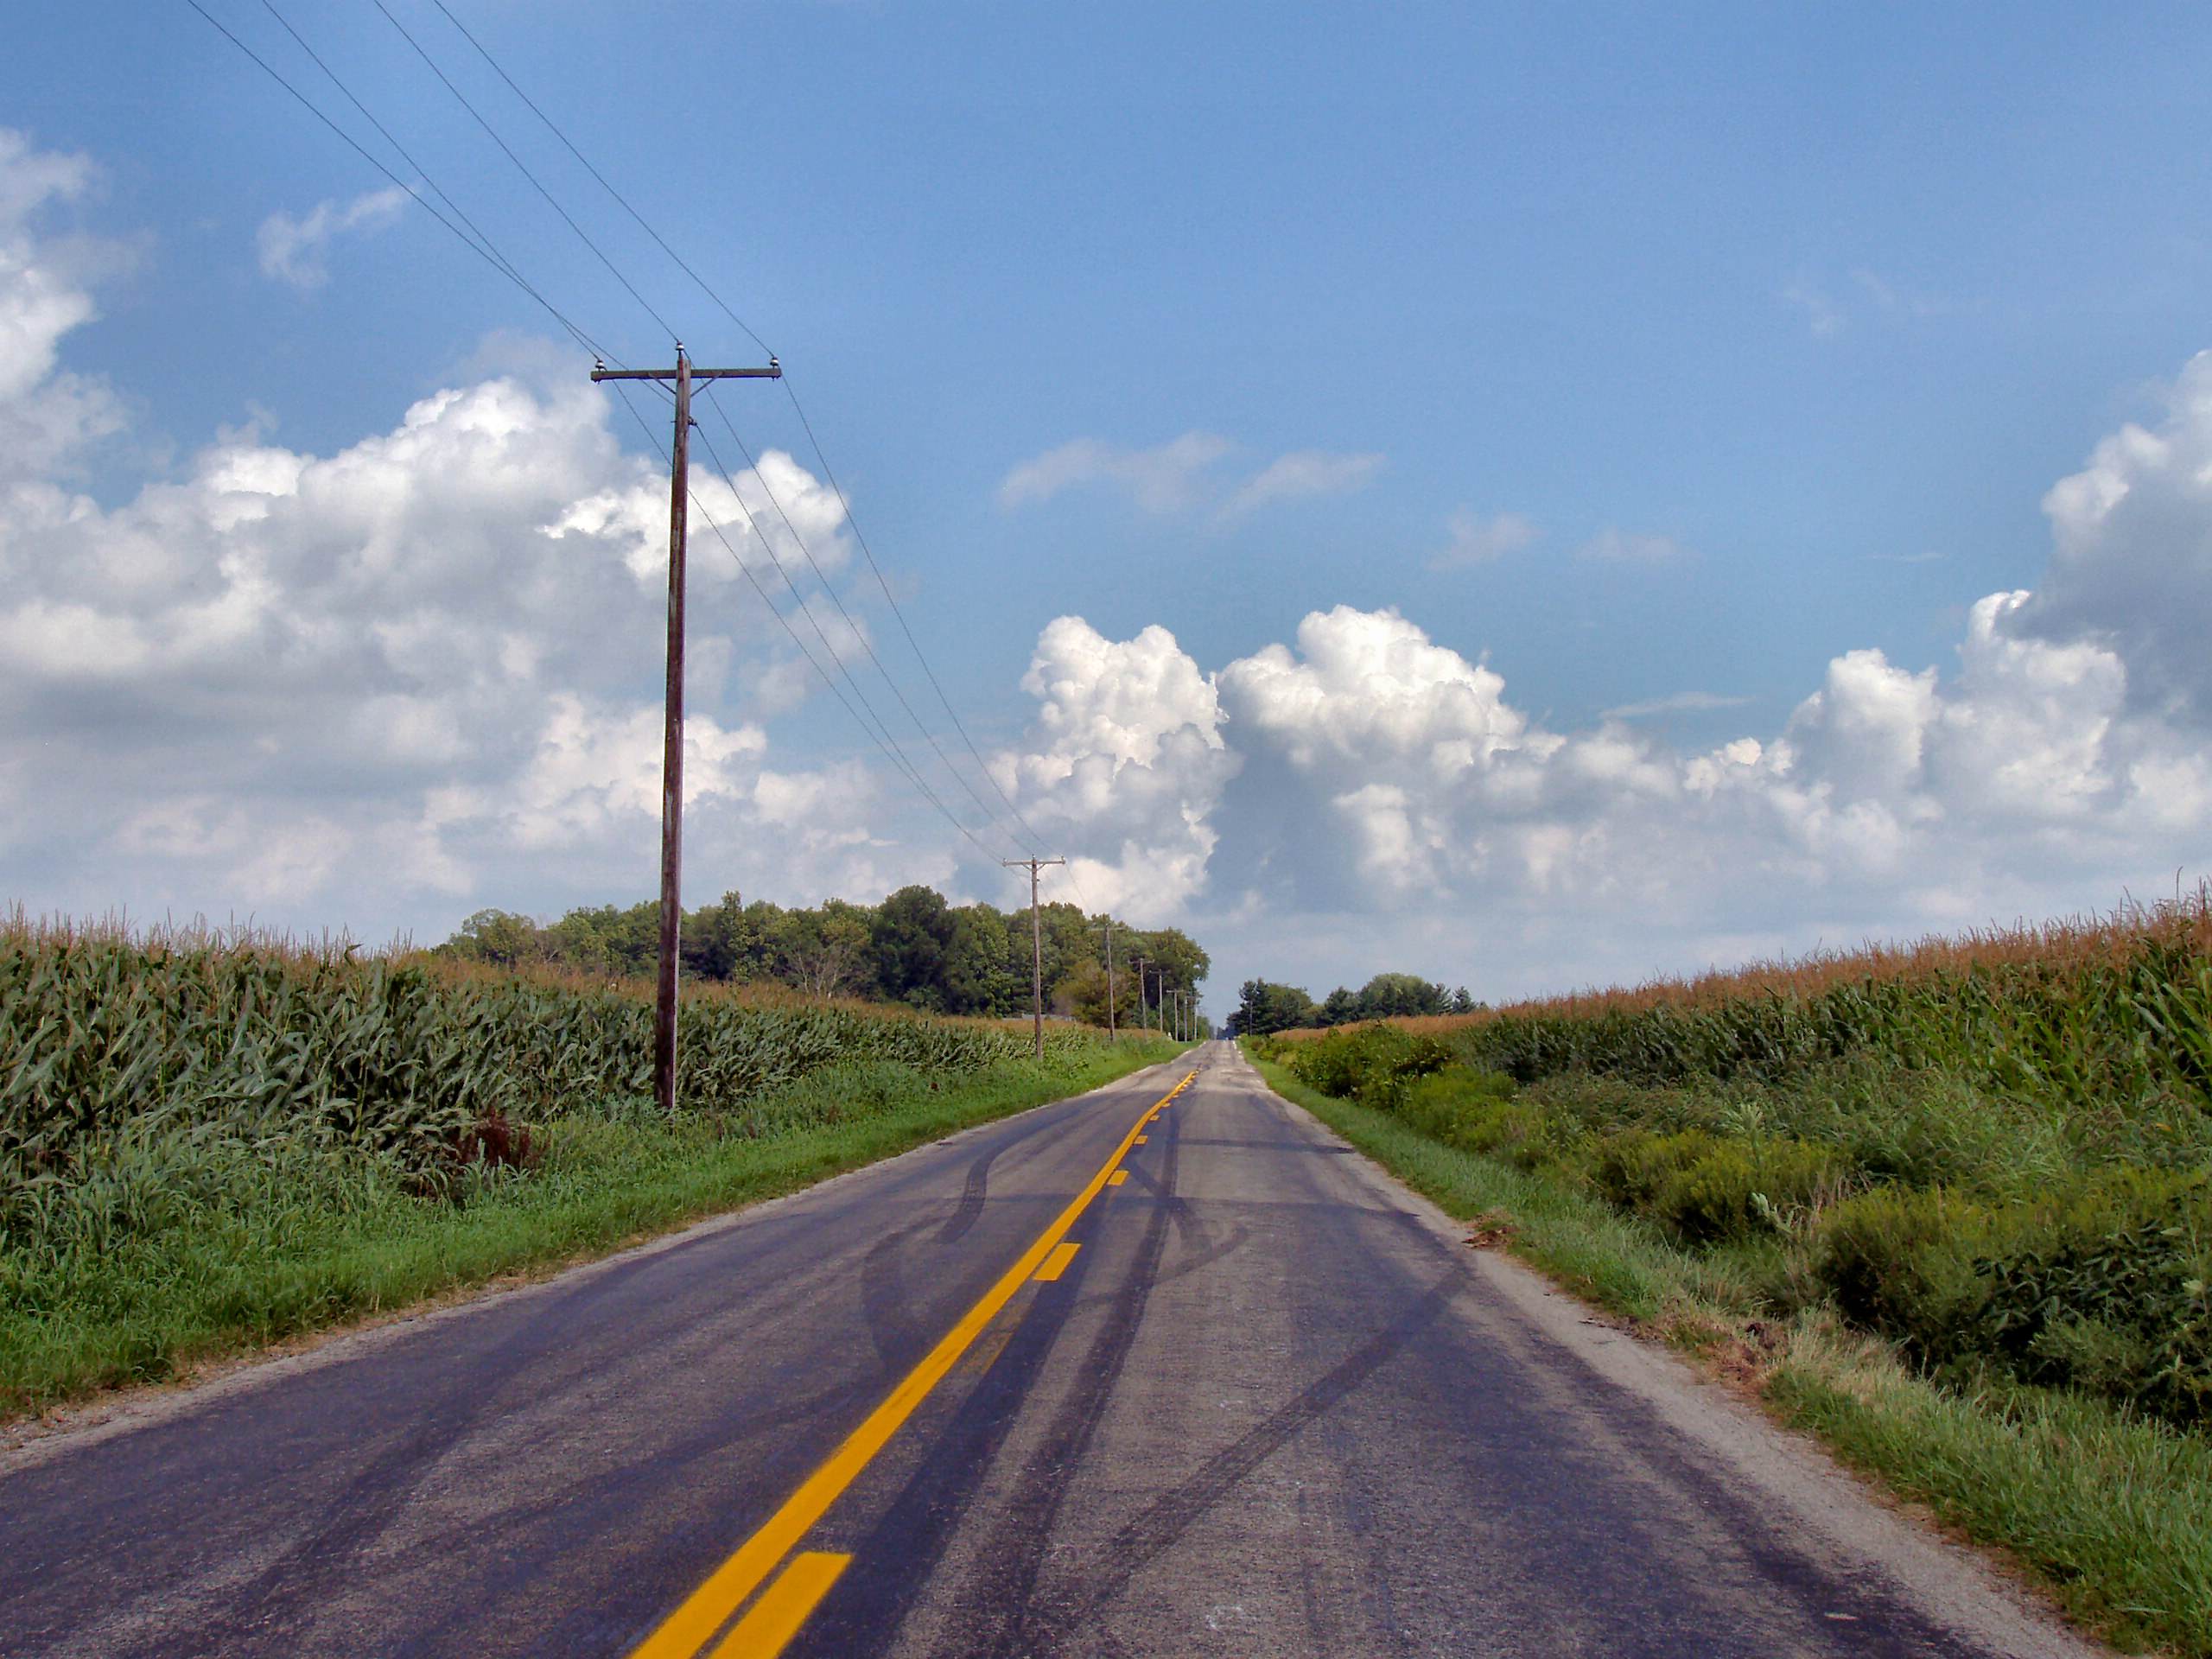 File:Indiana-rural-road.jpg - Wikimedia Commons